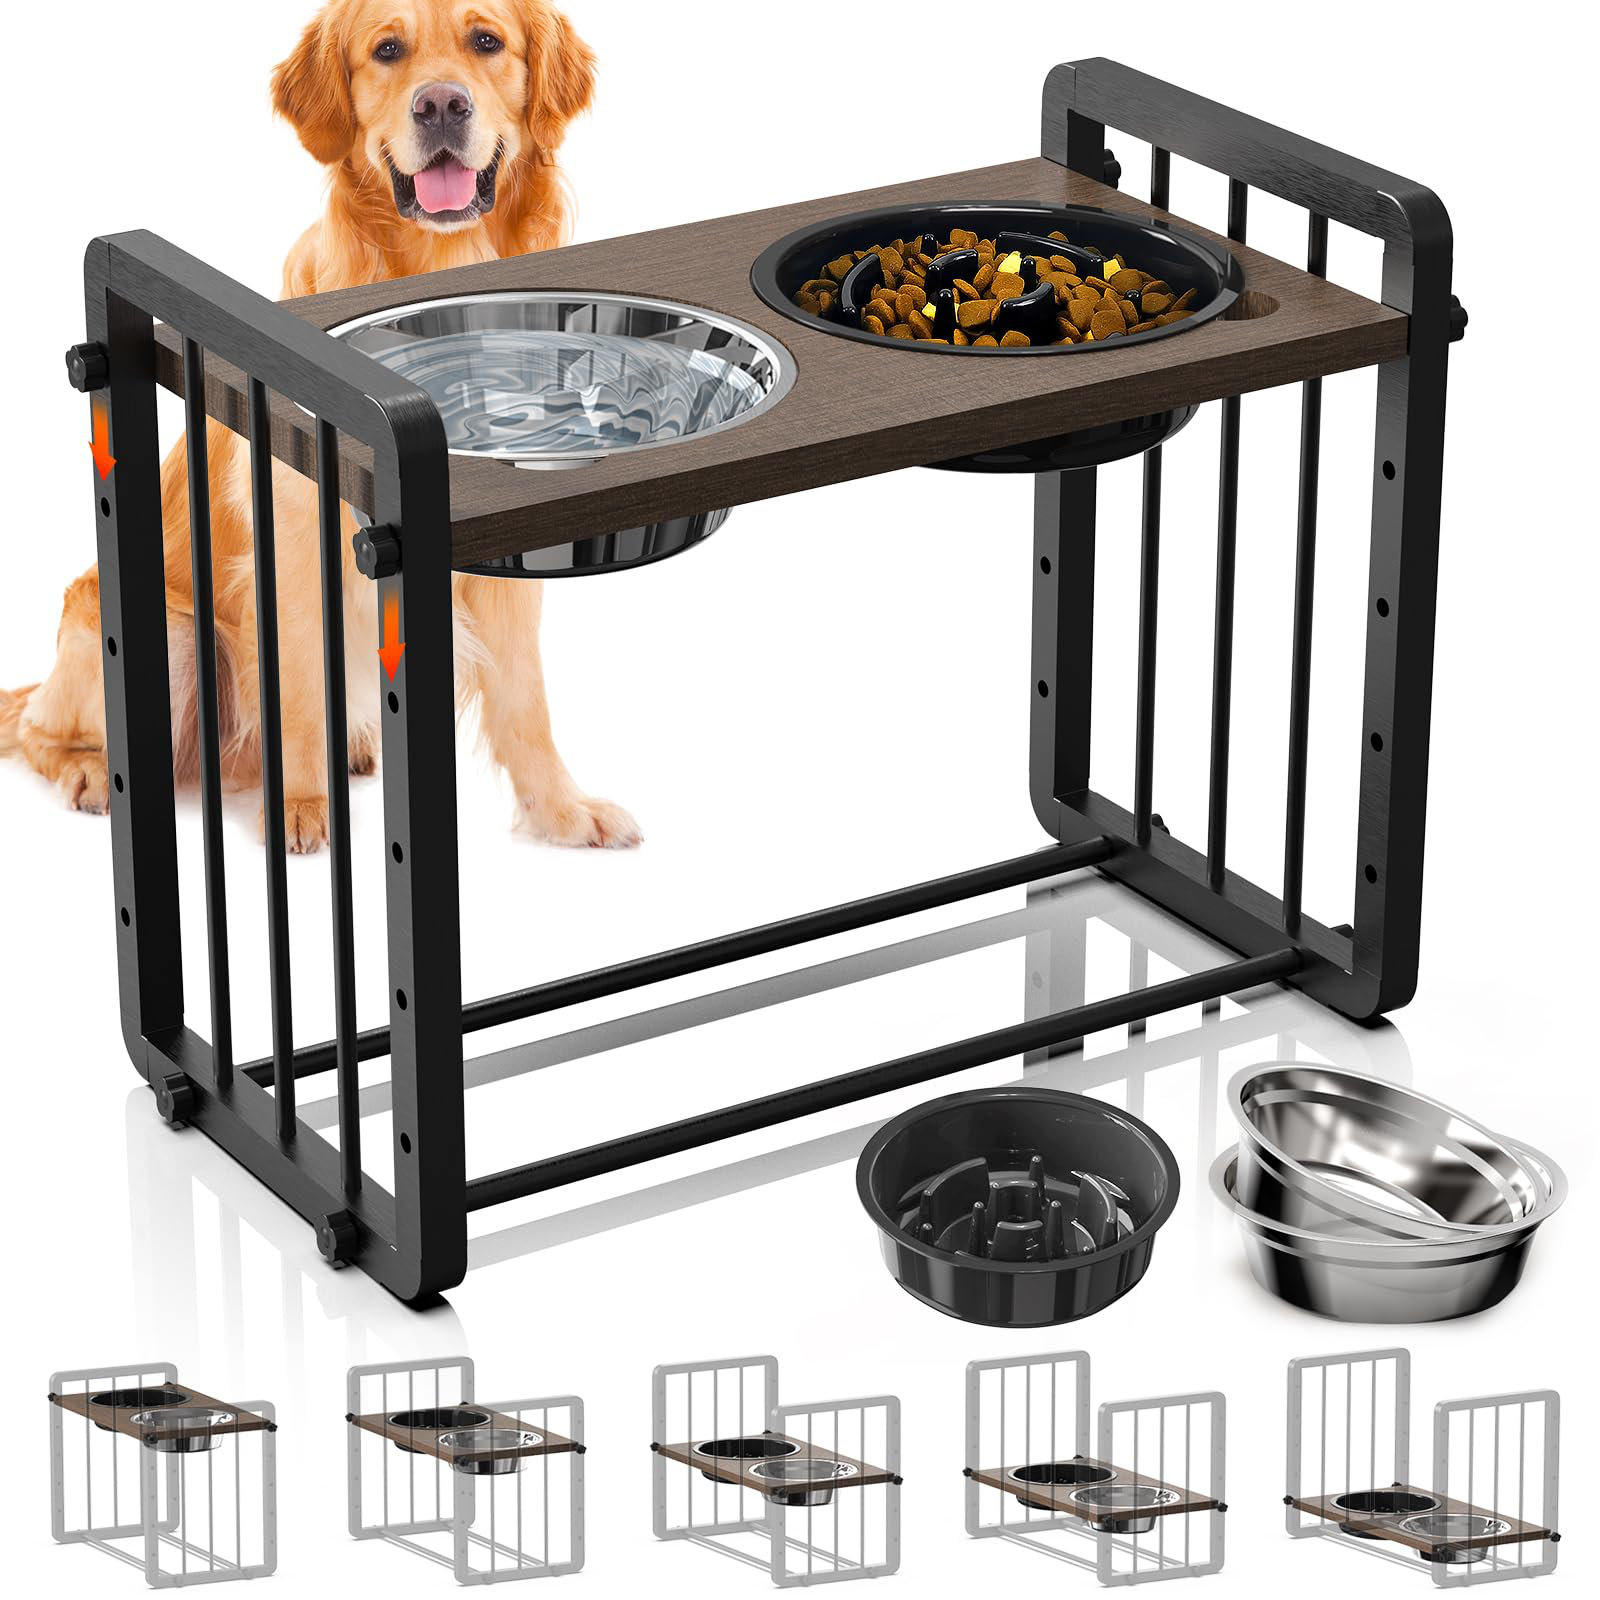 Veehoo Elevated Dog Bowls Raised Pet Bowl Stand w/ Slow Feeder & Food Water  Bowl